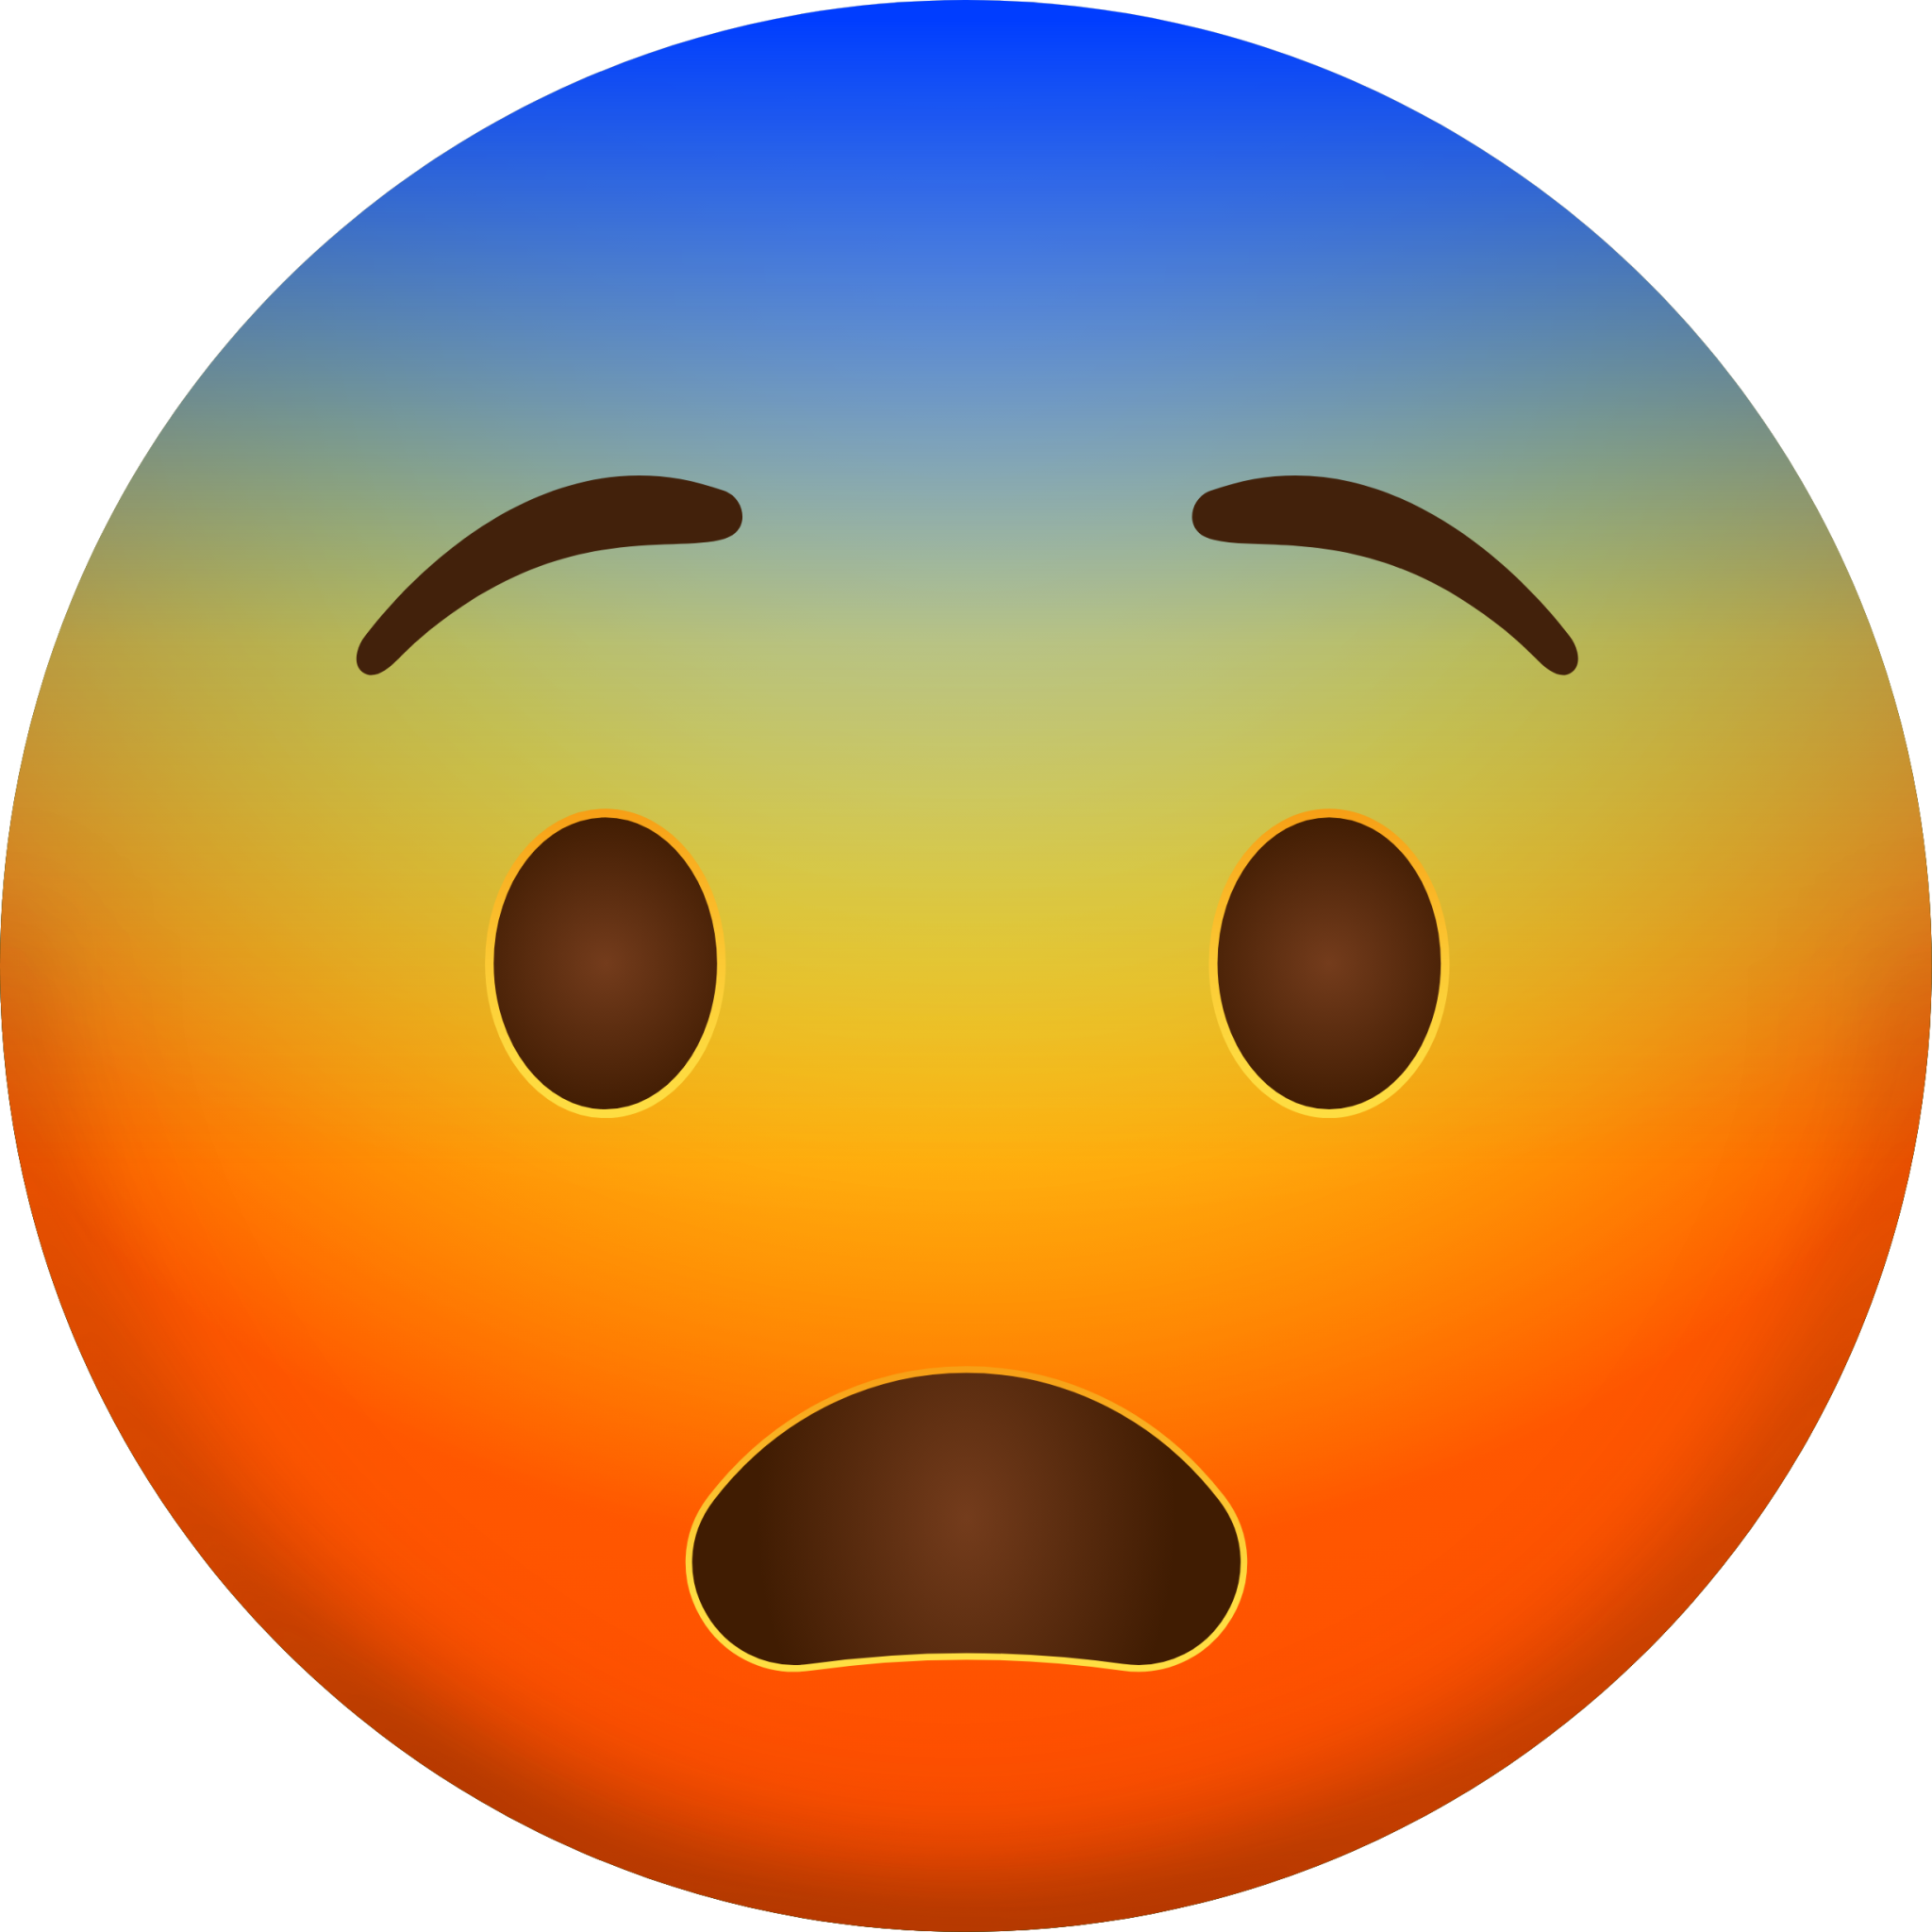 Orange Fear Face Emoji